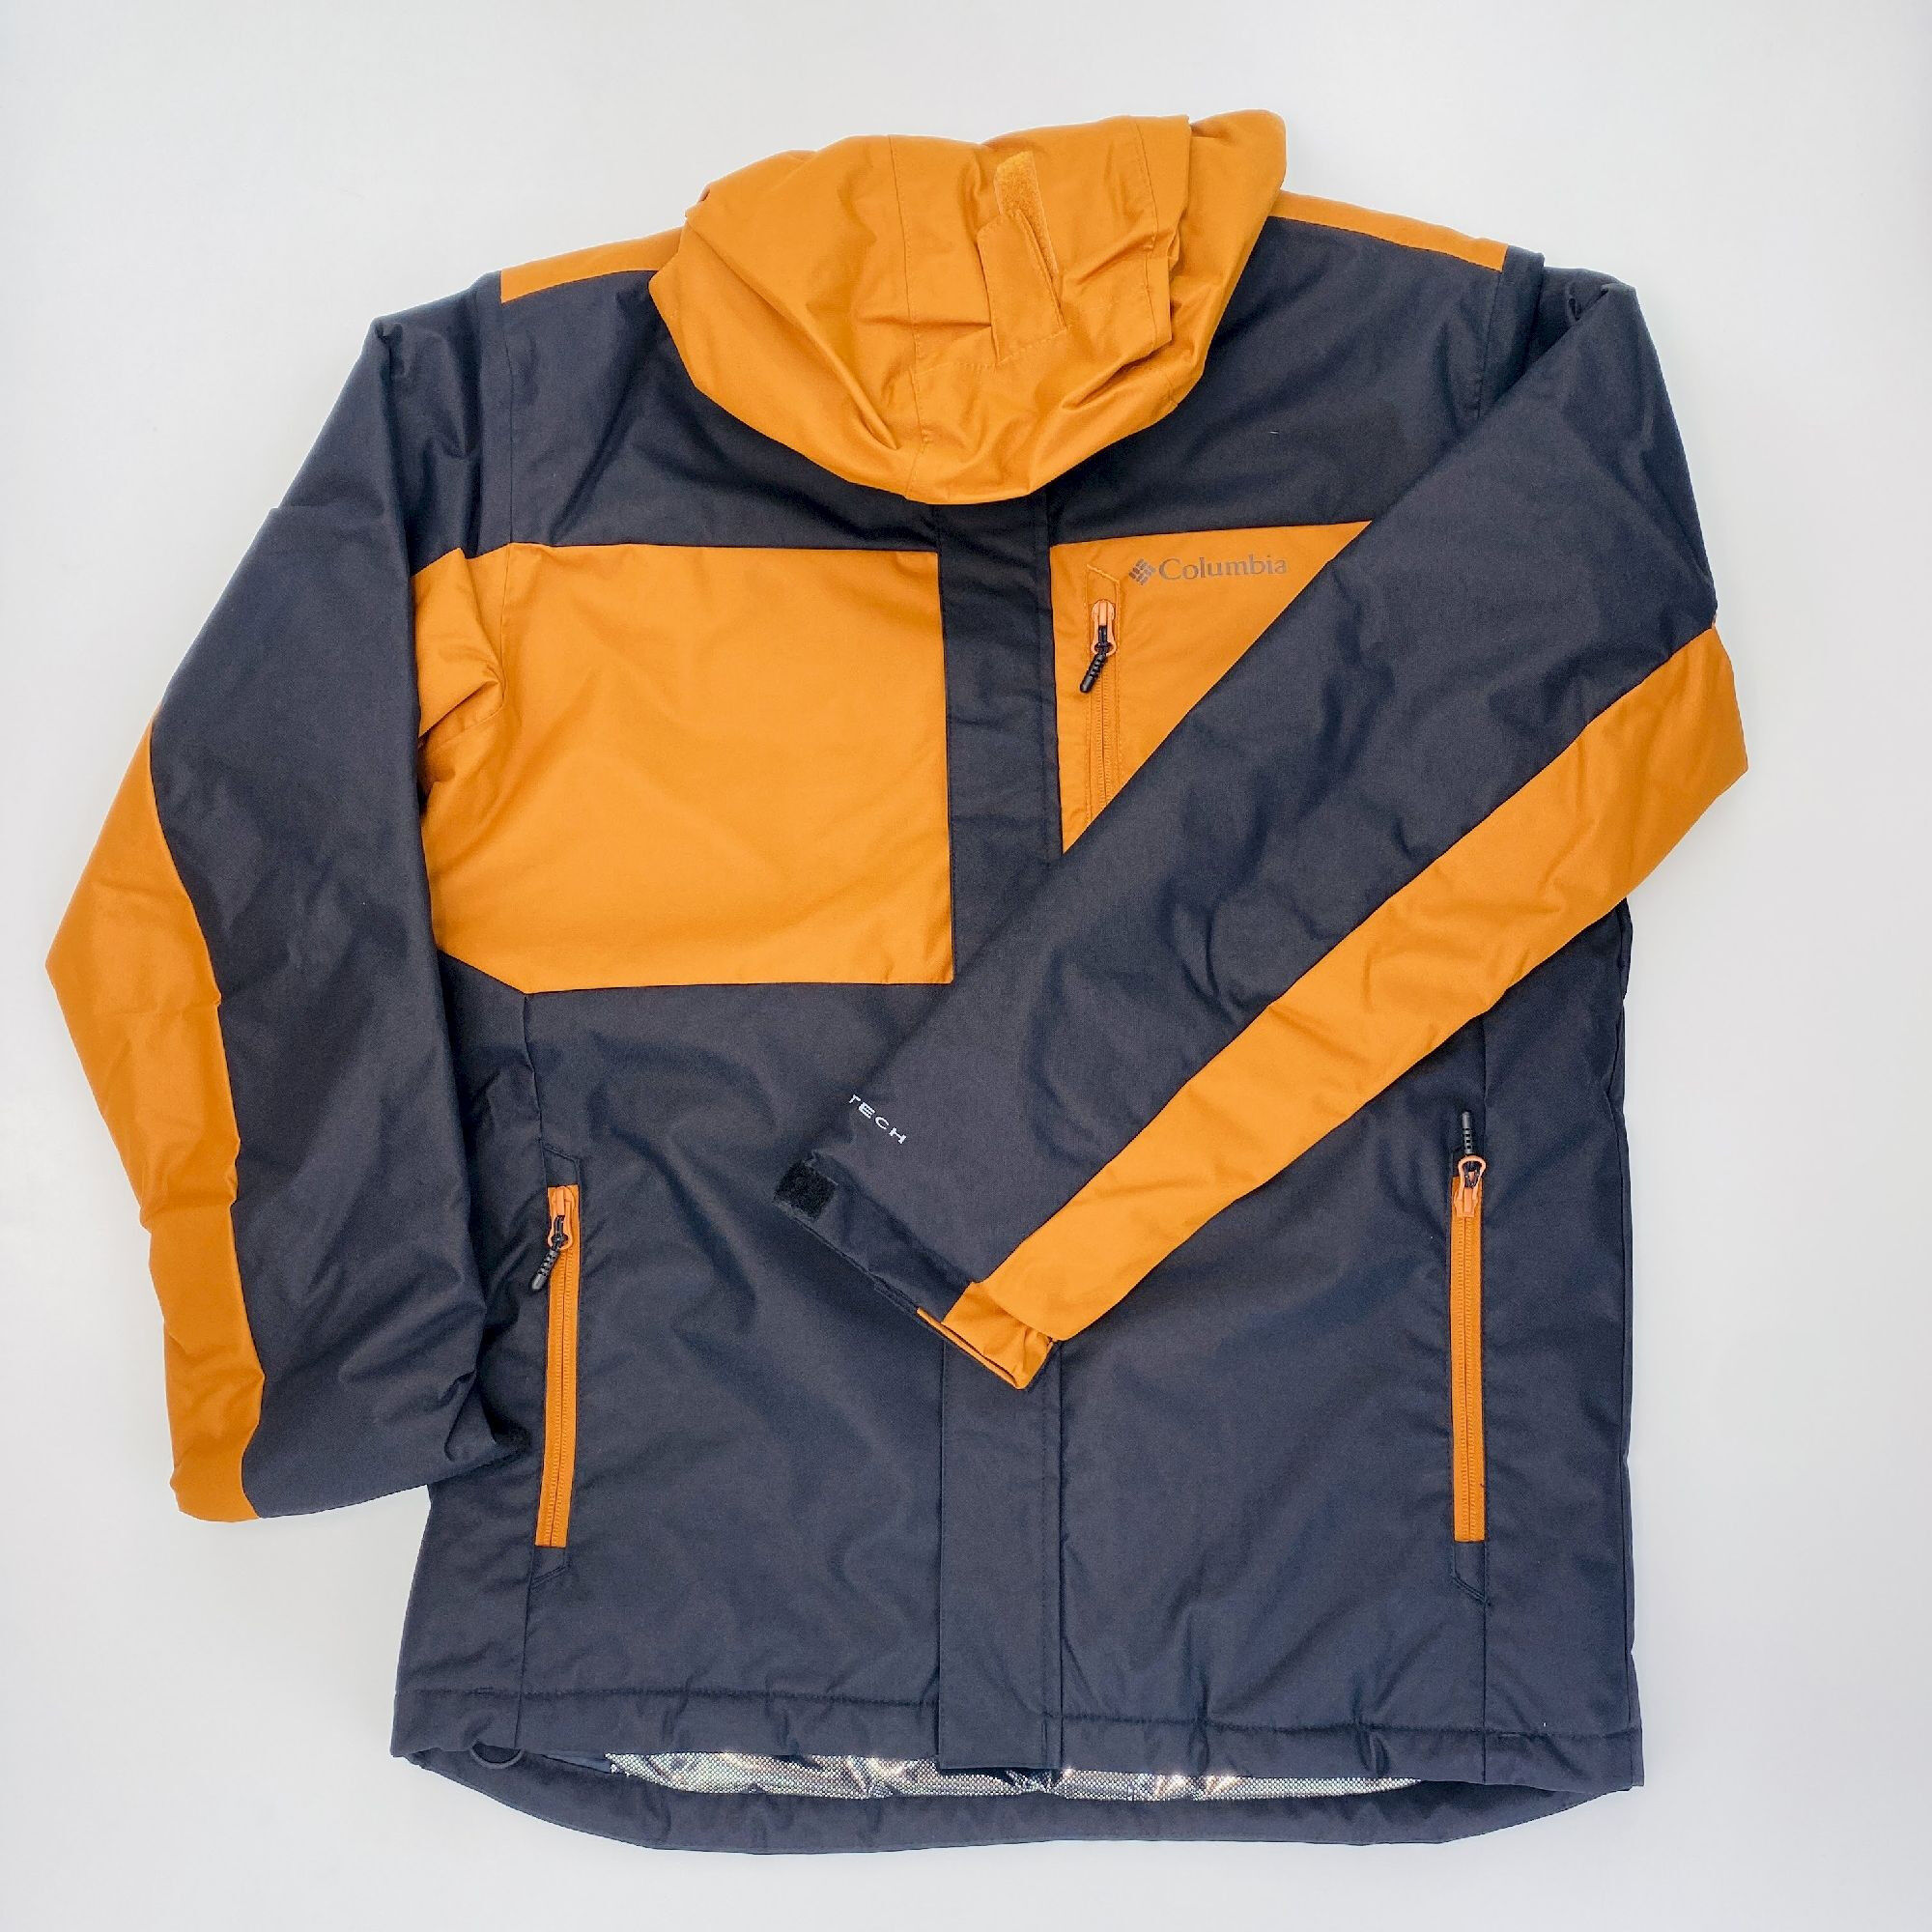 Columbia Tipton Peak™ II Insulated Jacket - Giacca antipioggia di seconda mano - Uomo - Blu - M | Hardloop